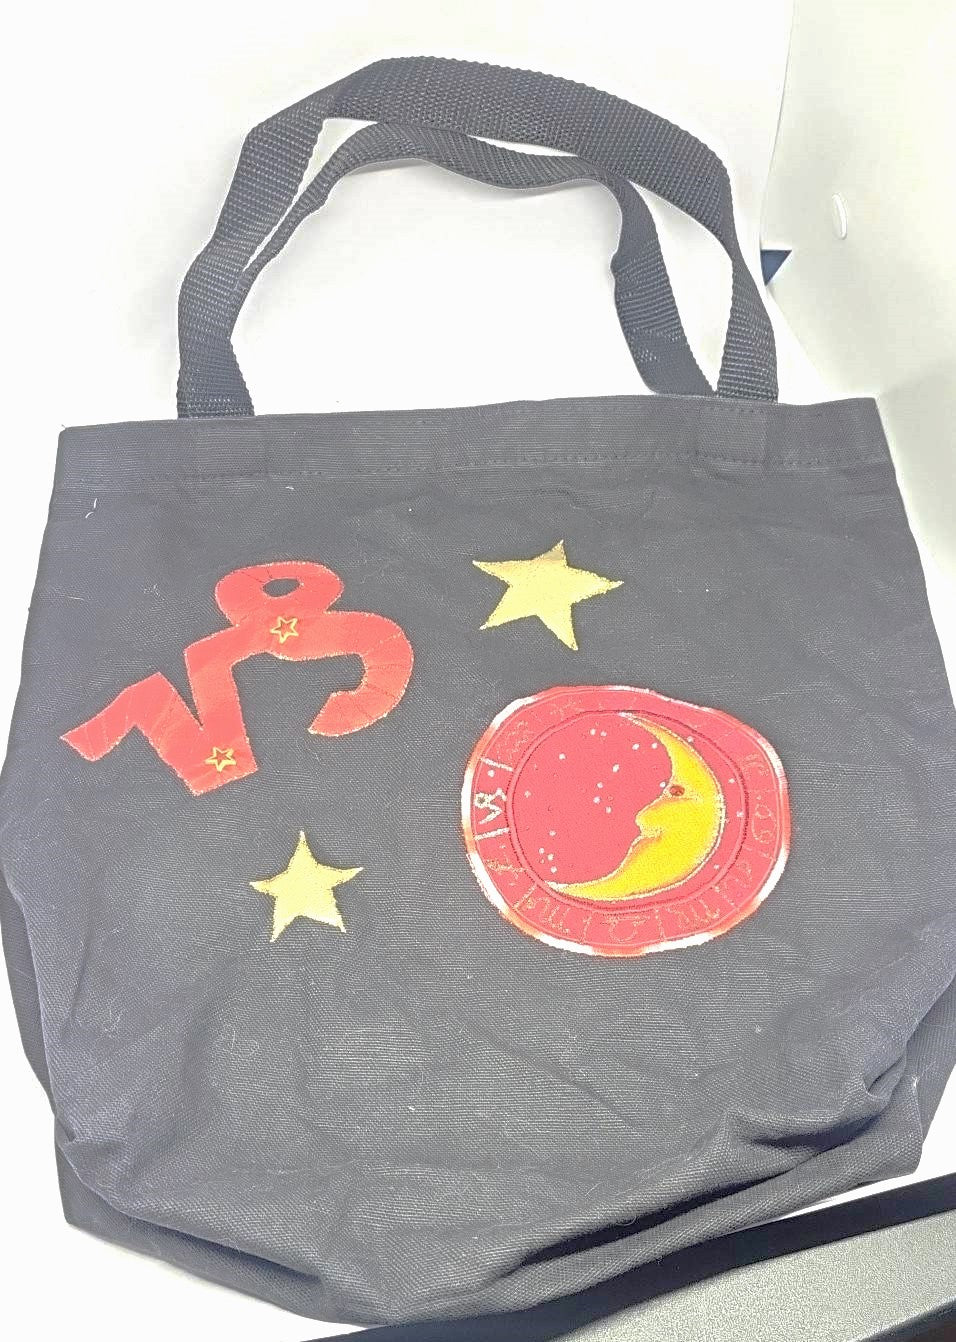 Tote Bag, Black Astrology Tote (Capricorn)